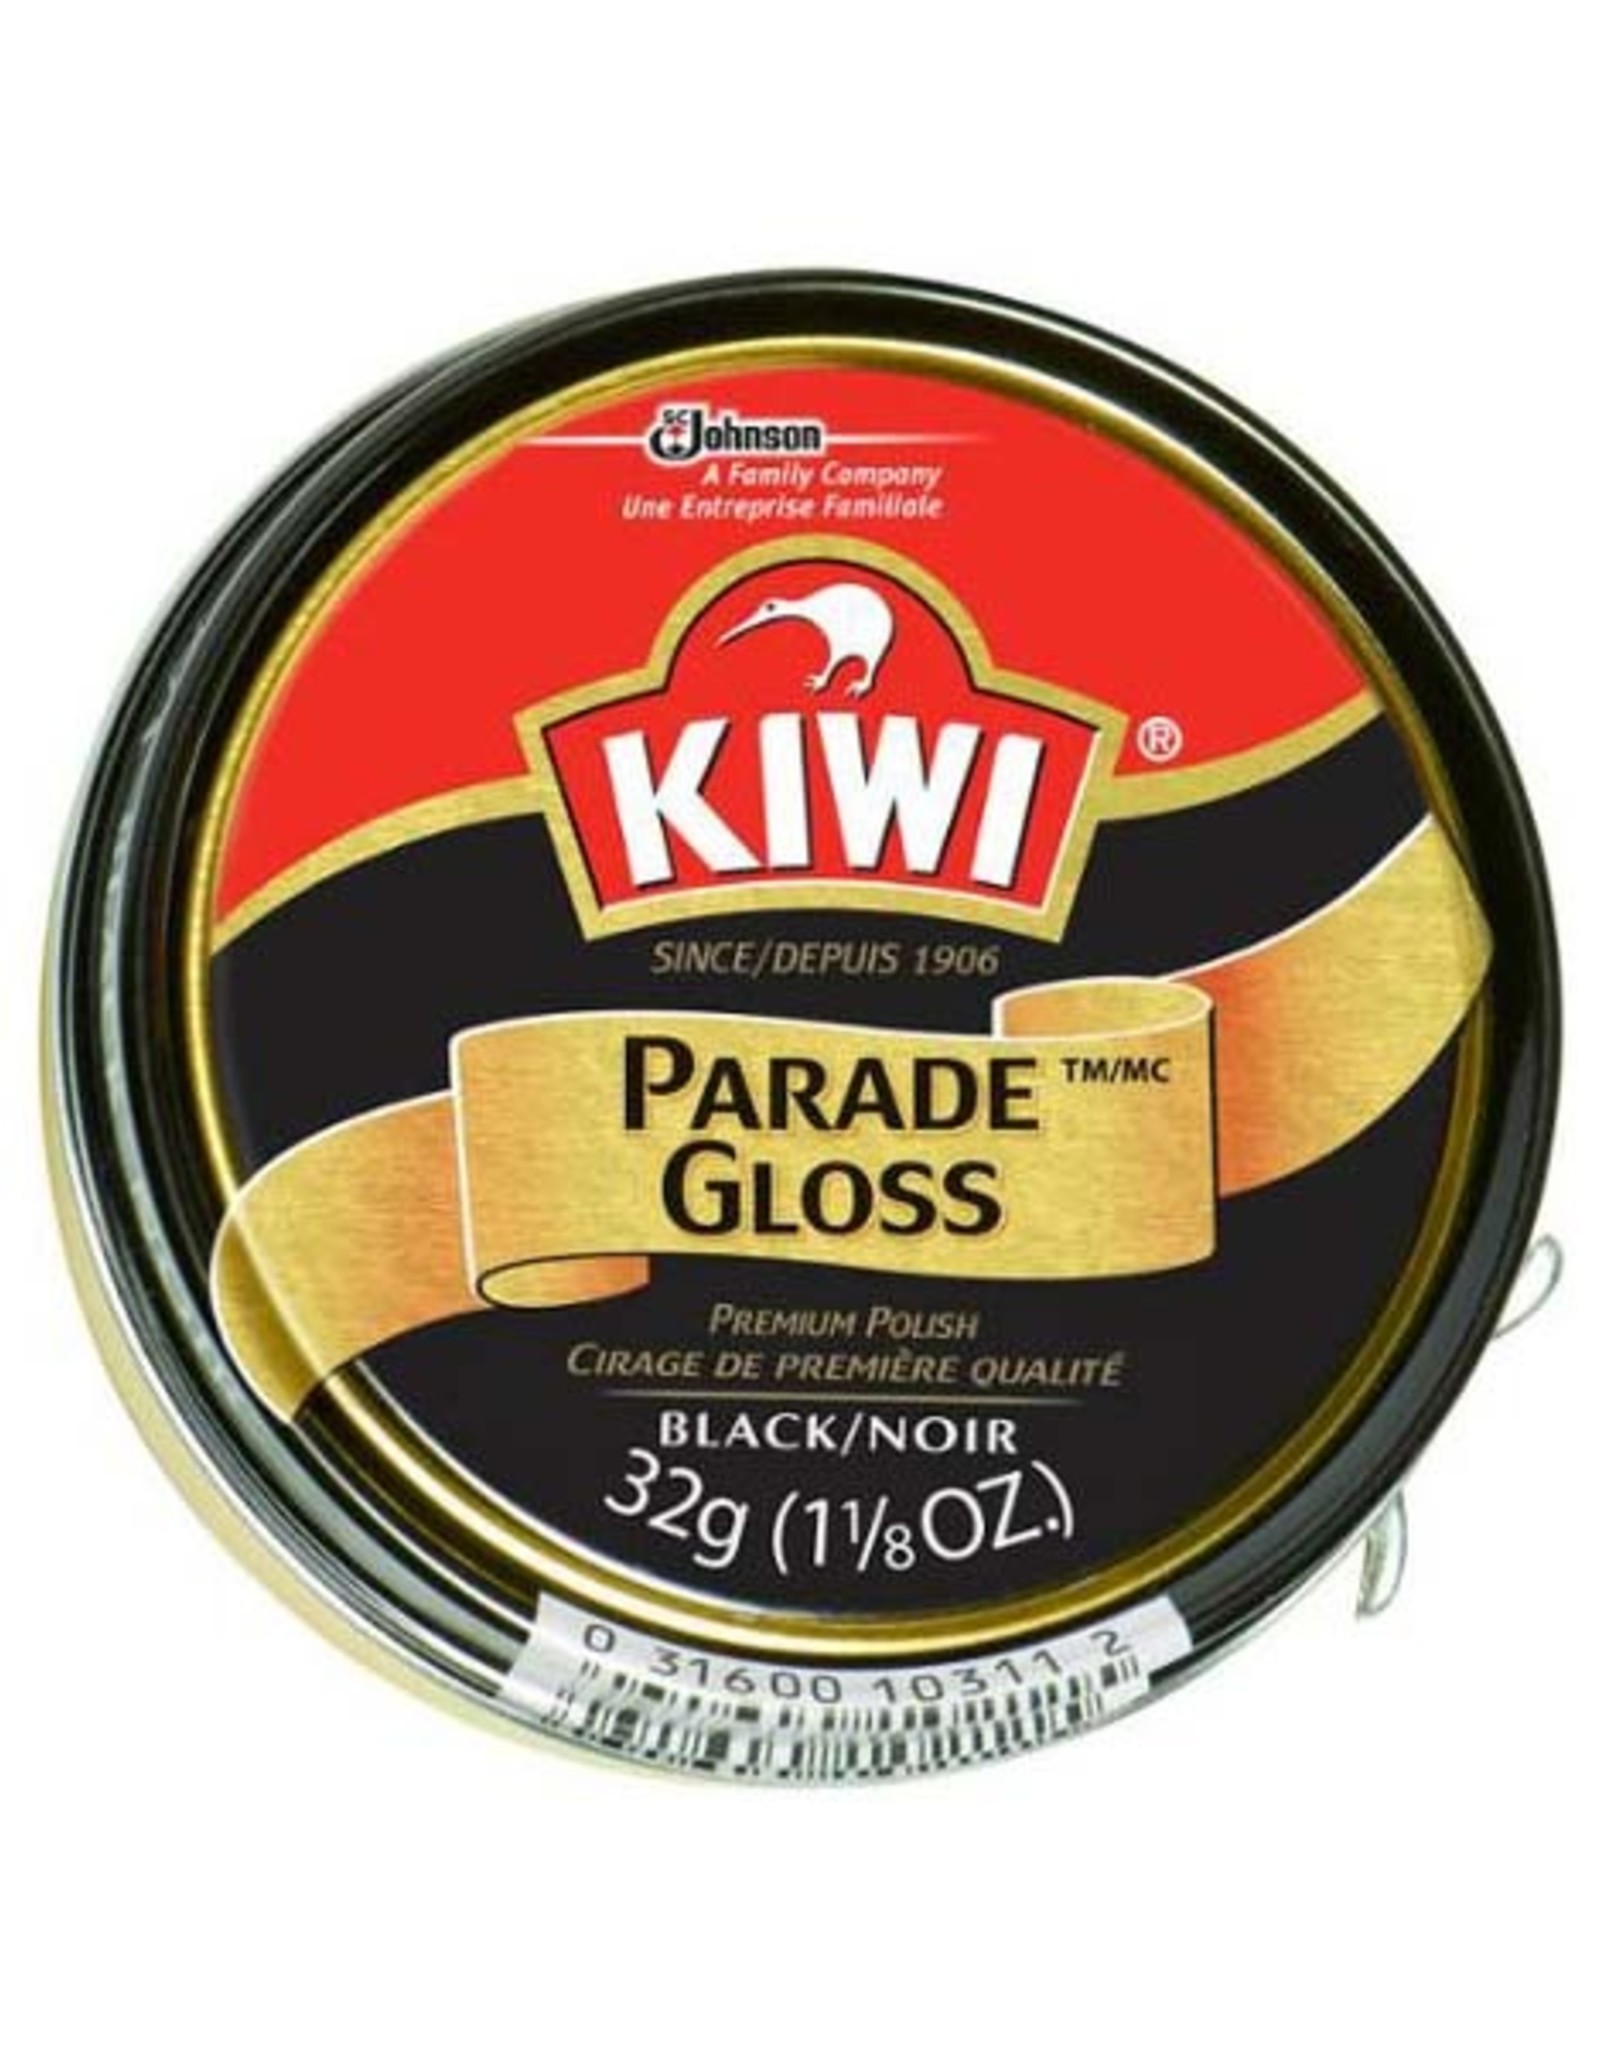 Kiwi Kiwi Parade Gloss Boot Polish - 32g